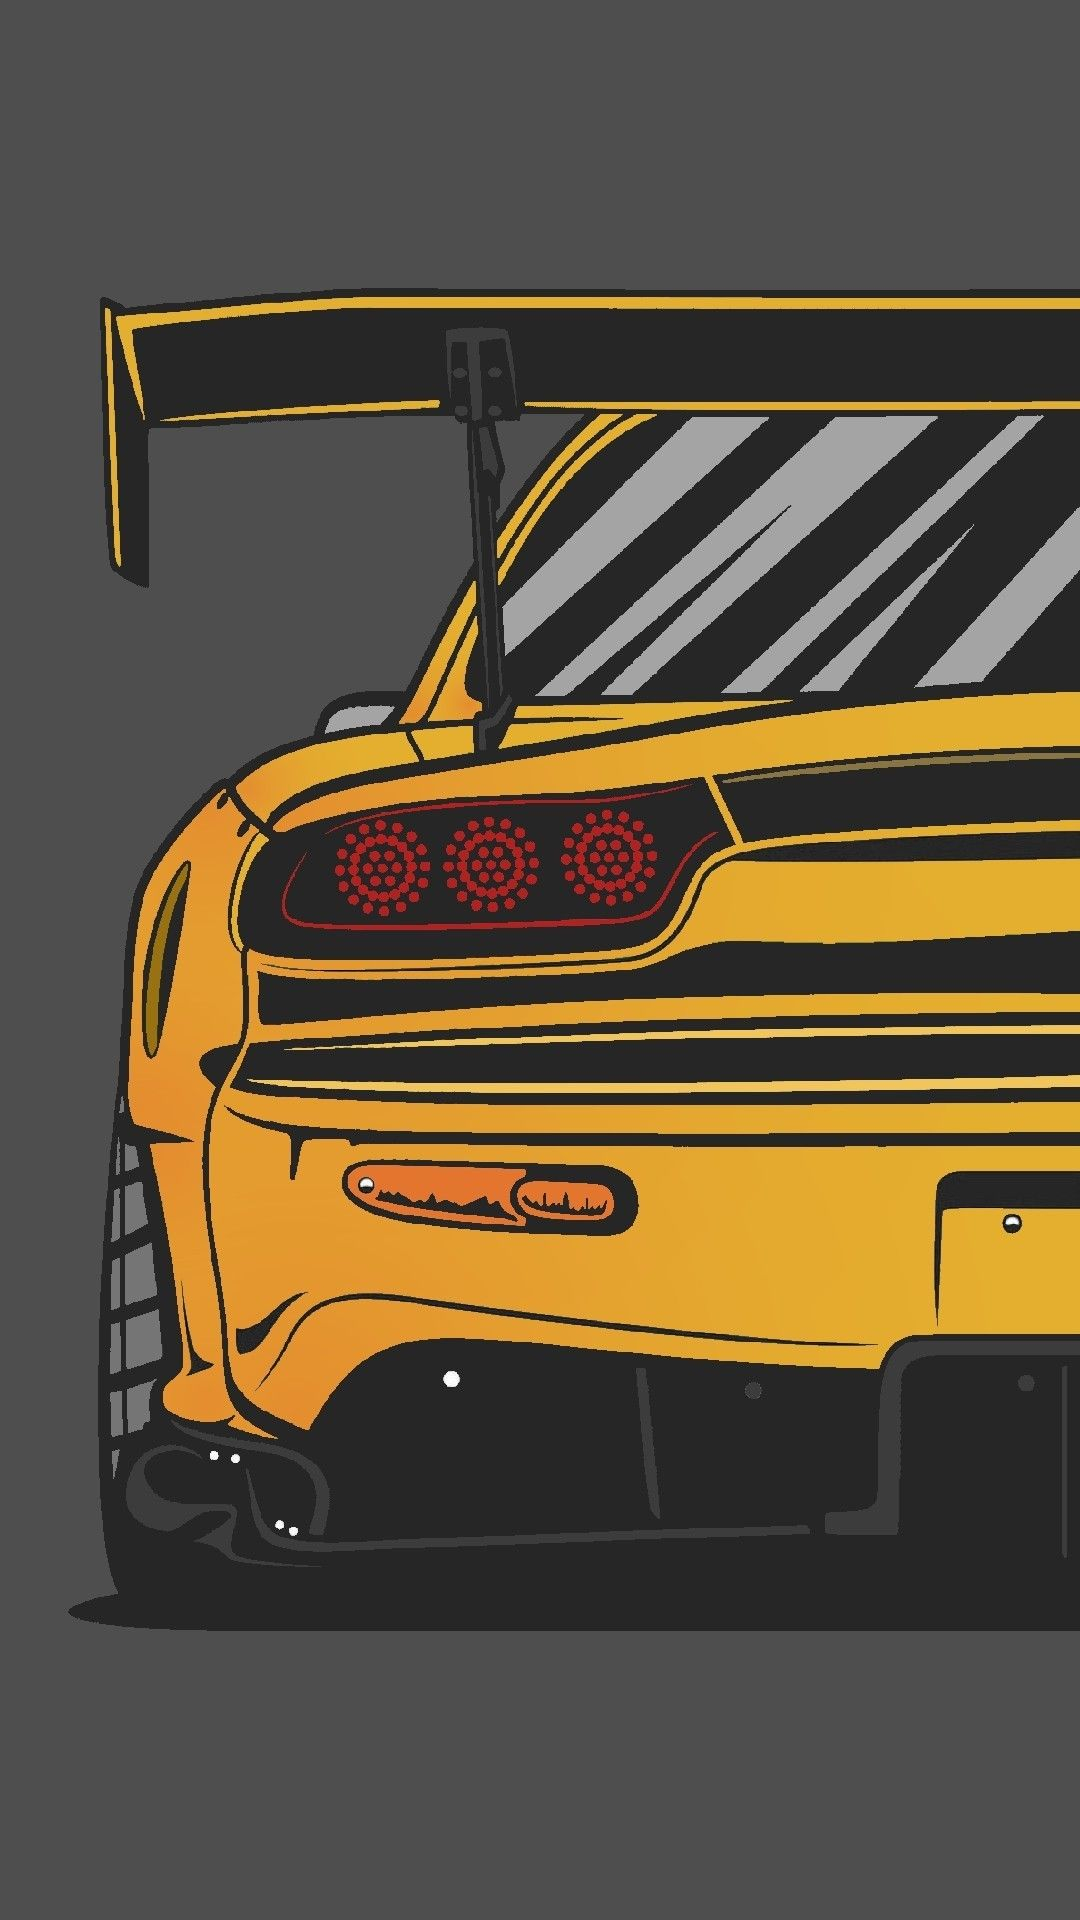 1080x1920 Pin by Geovanne Moura Barreto on Cars Art Wallpaper | Cool car drawings, Art cars, Car drawings